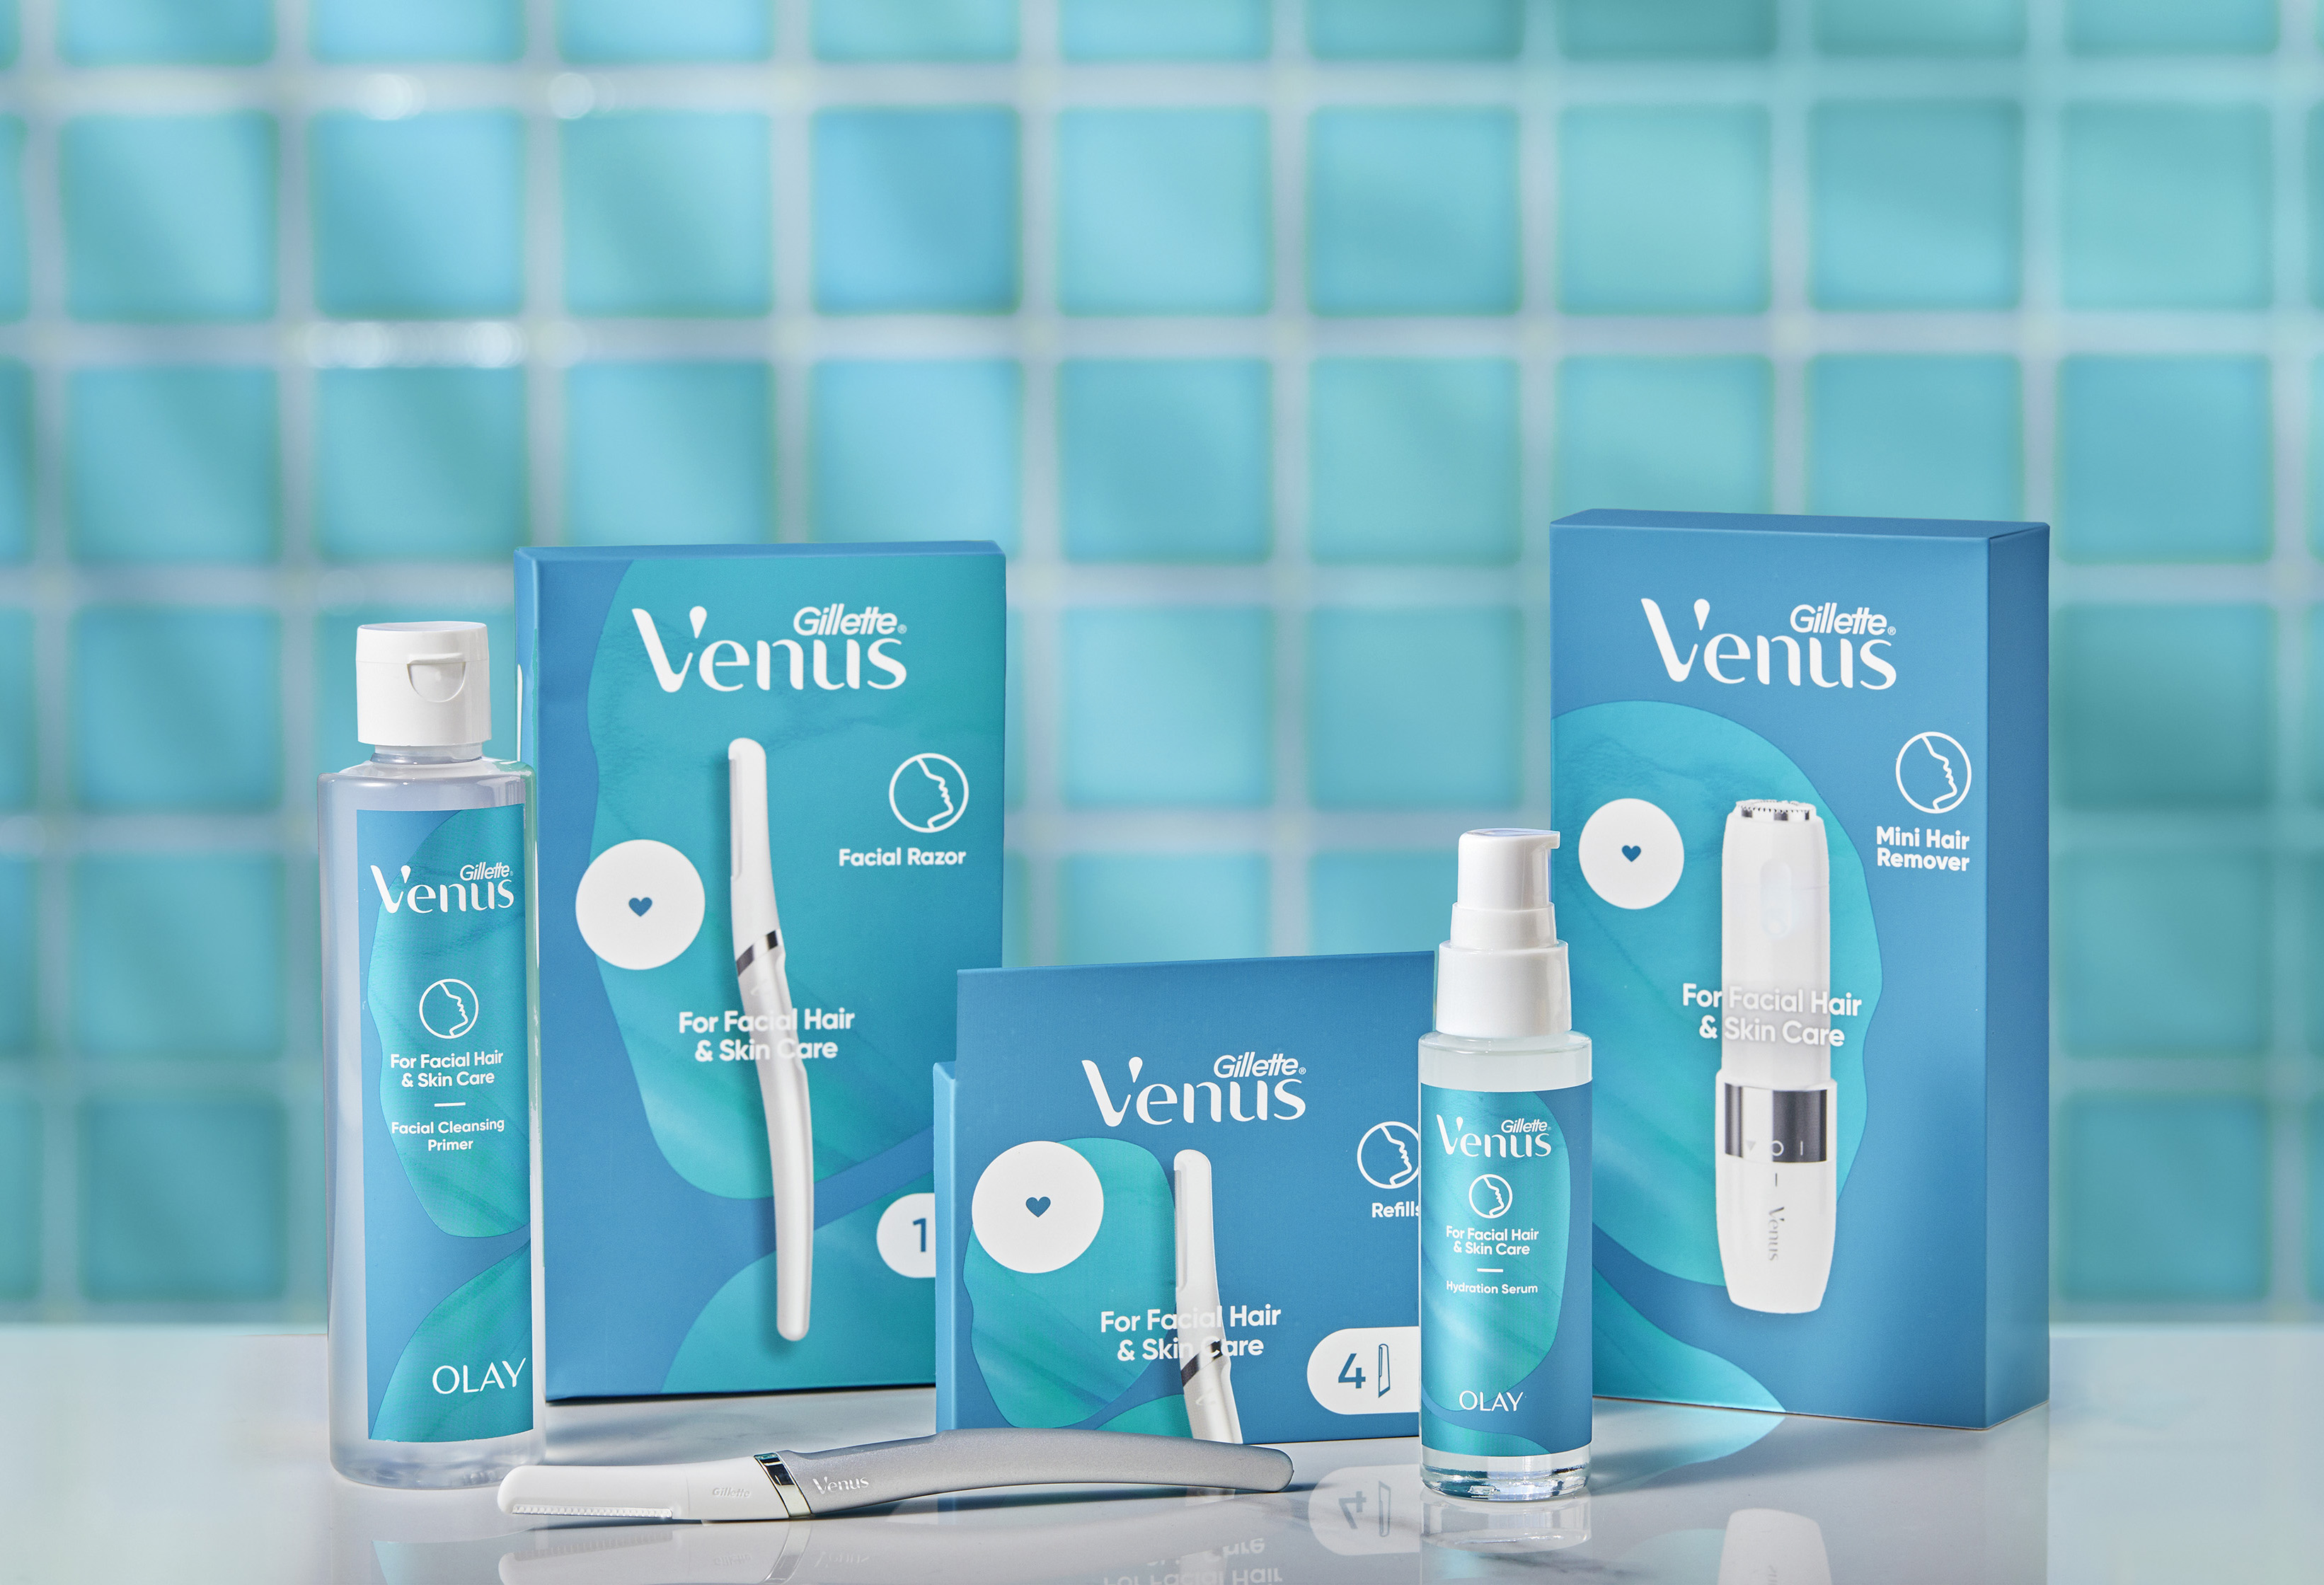 Gillette Venus Women's Razors and Shaving Products | Venus